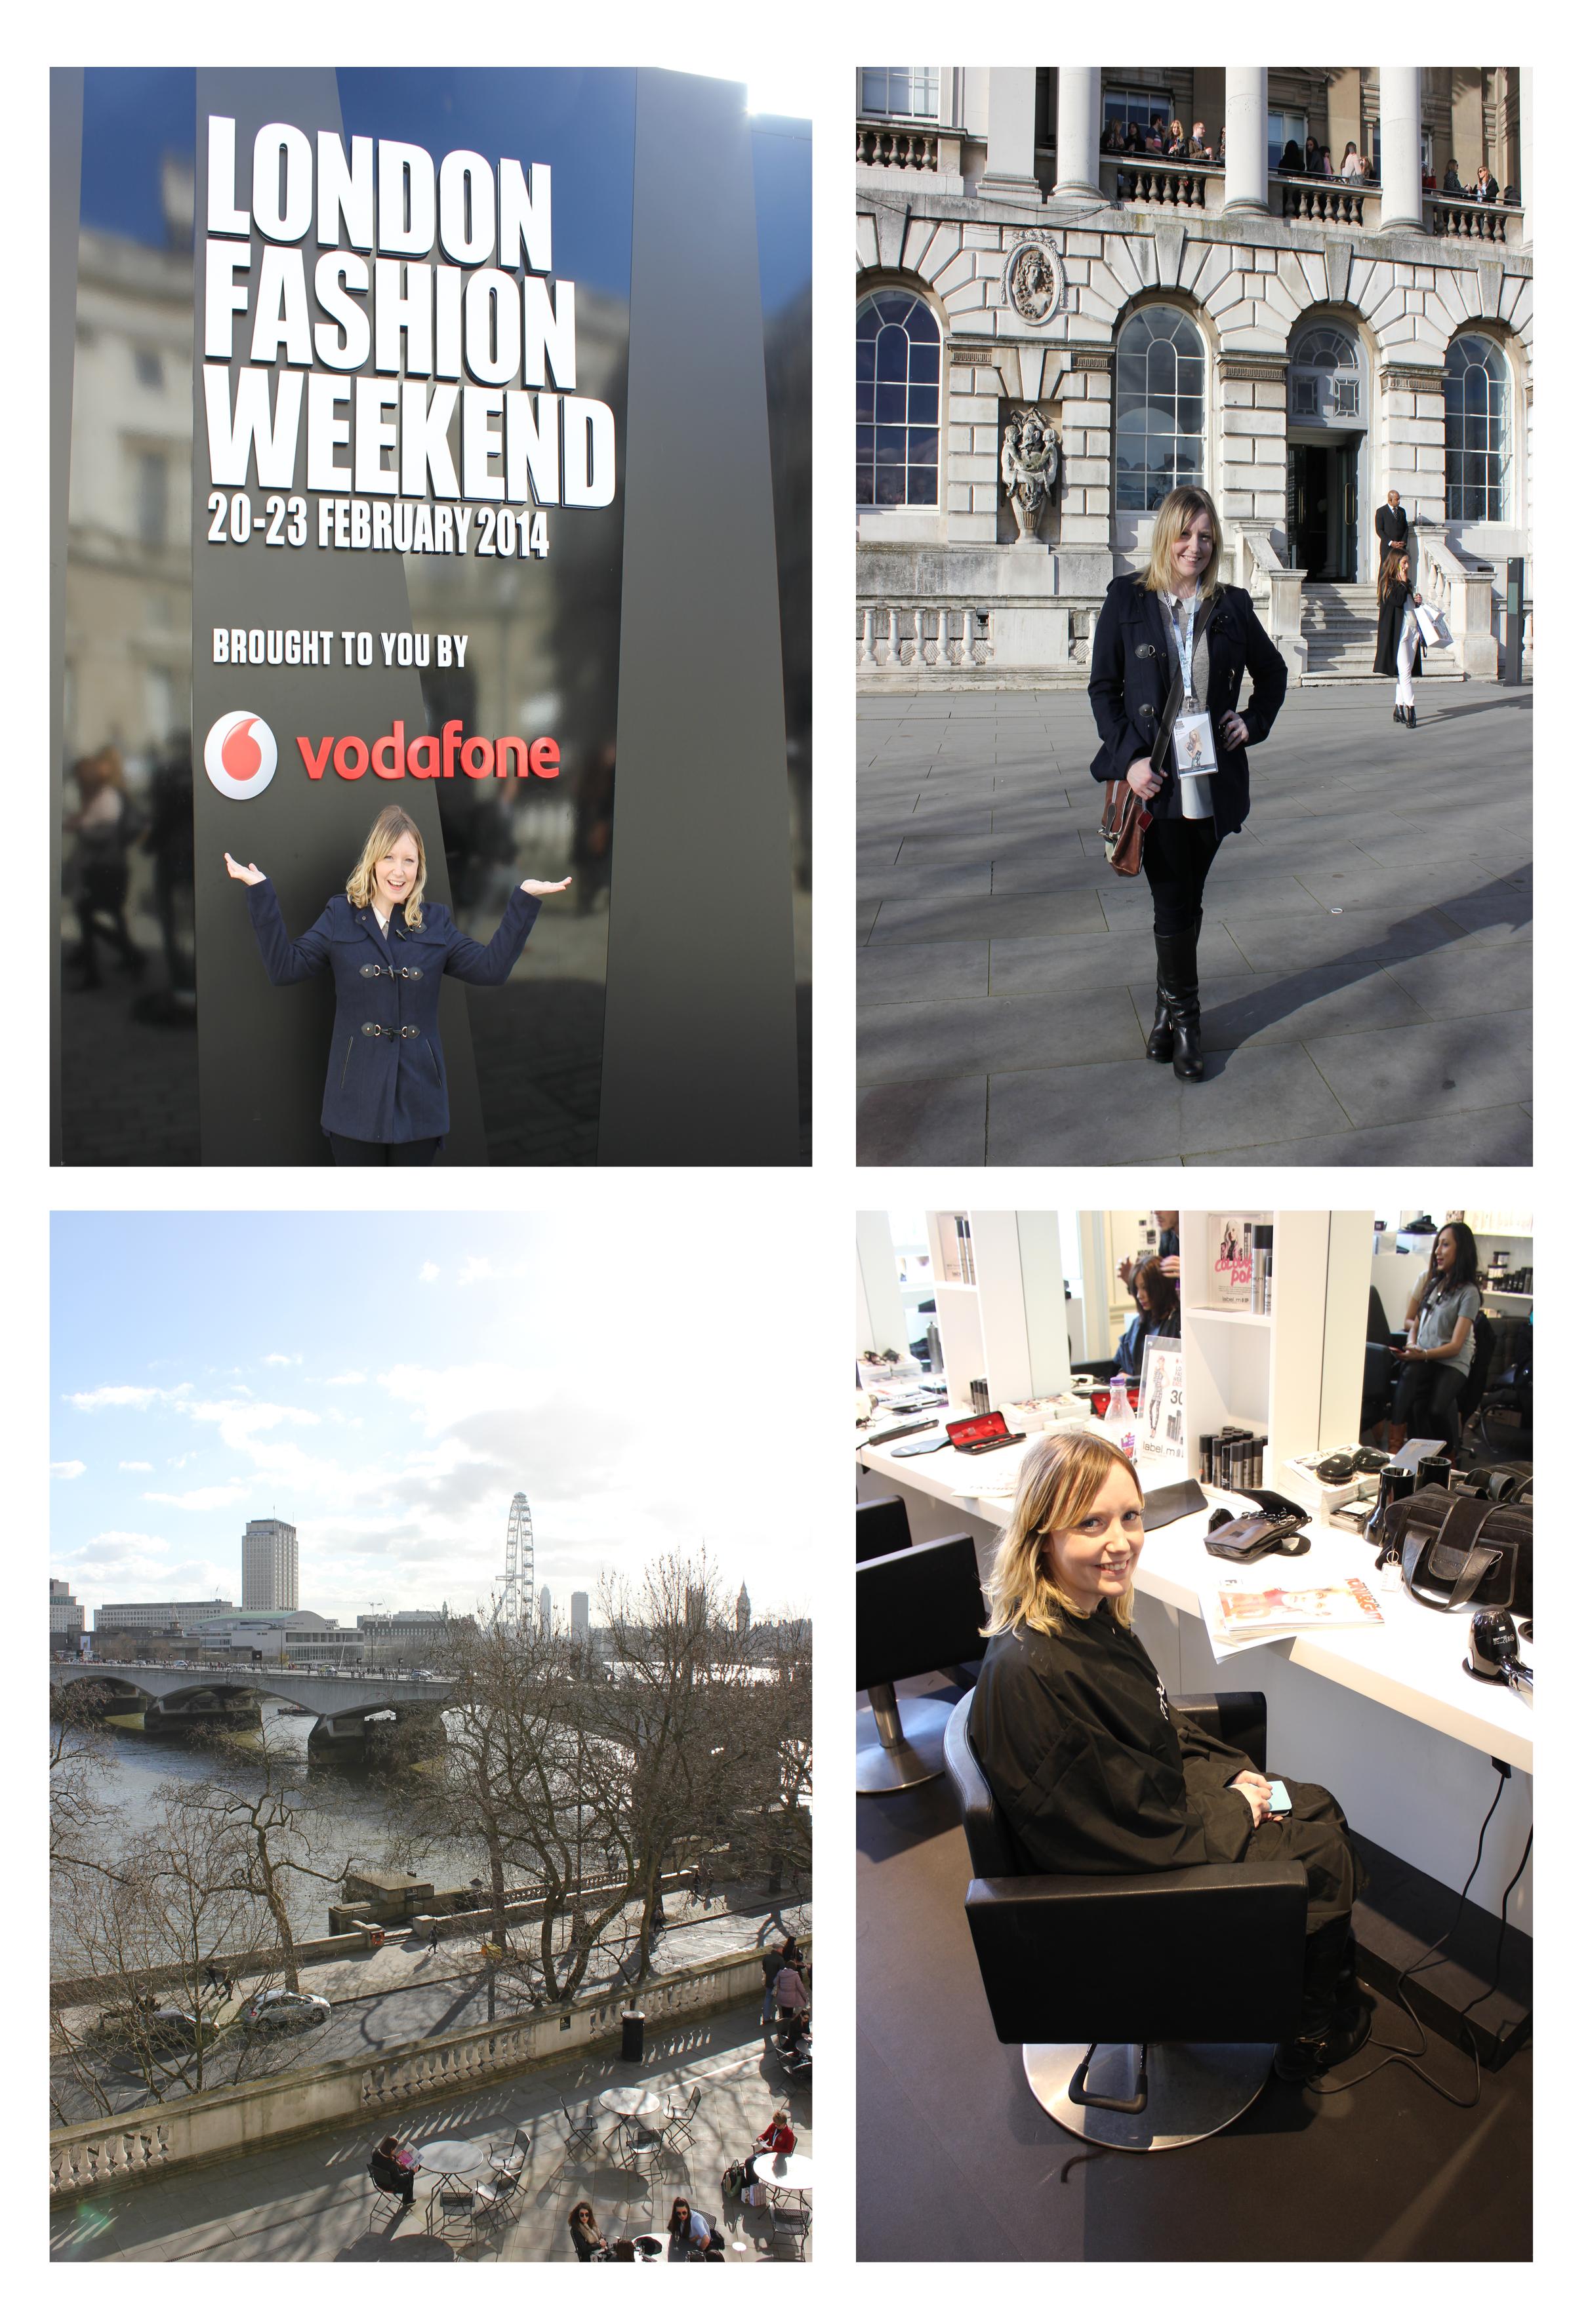 London Fashion Weekend at Somerset House 2014